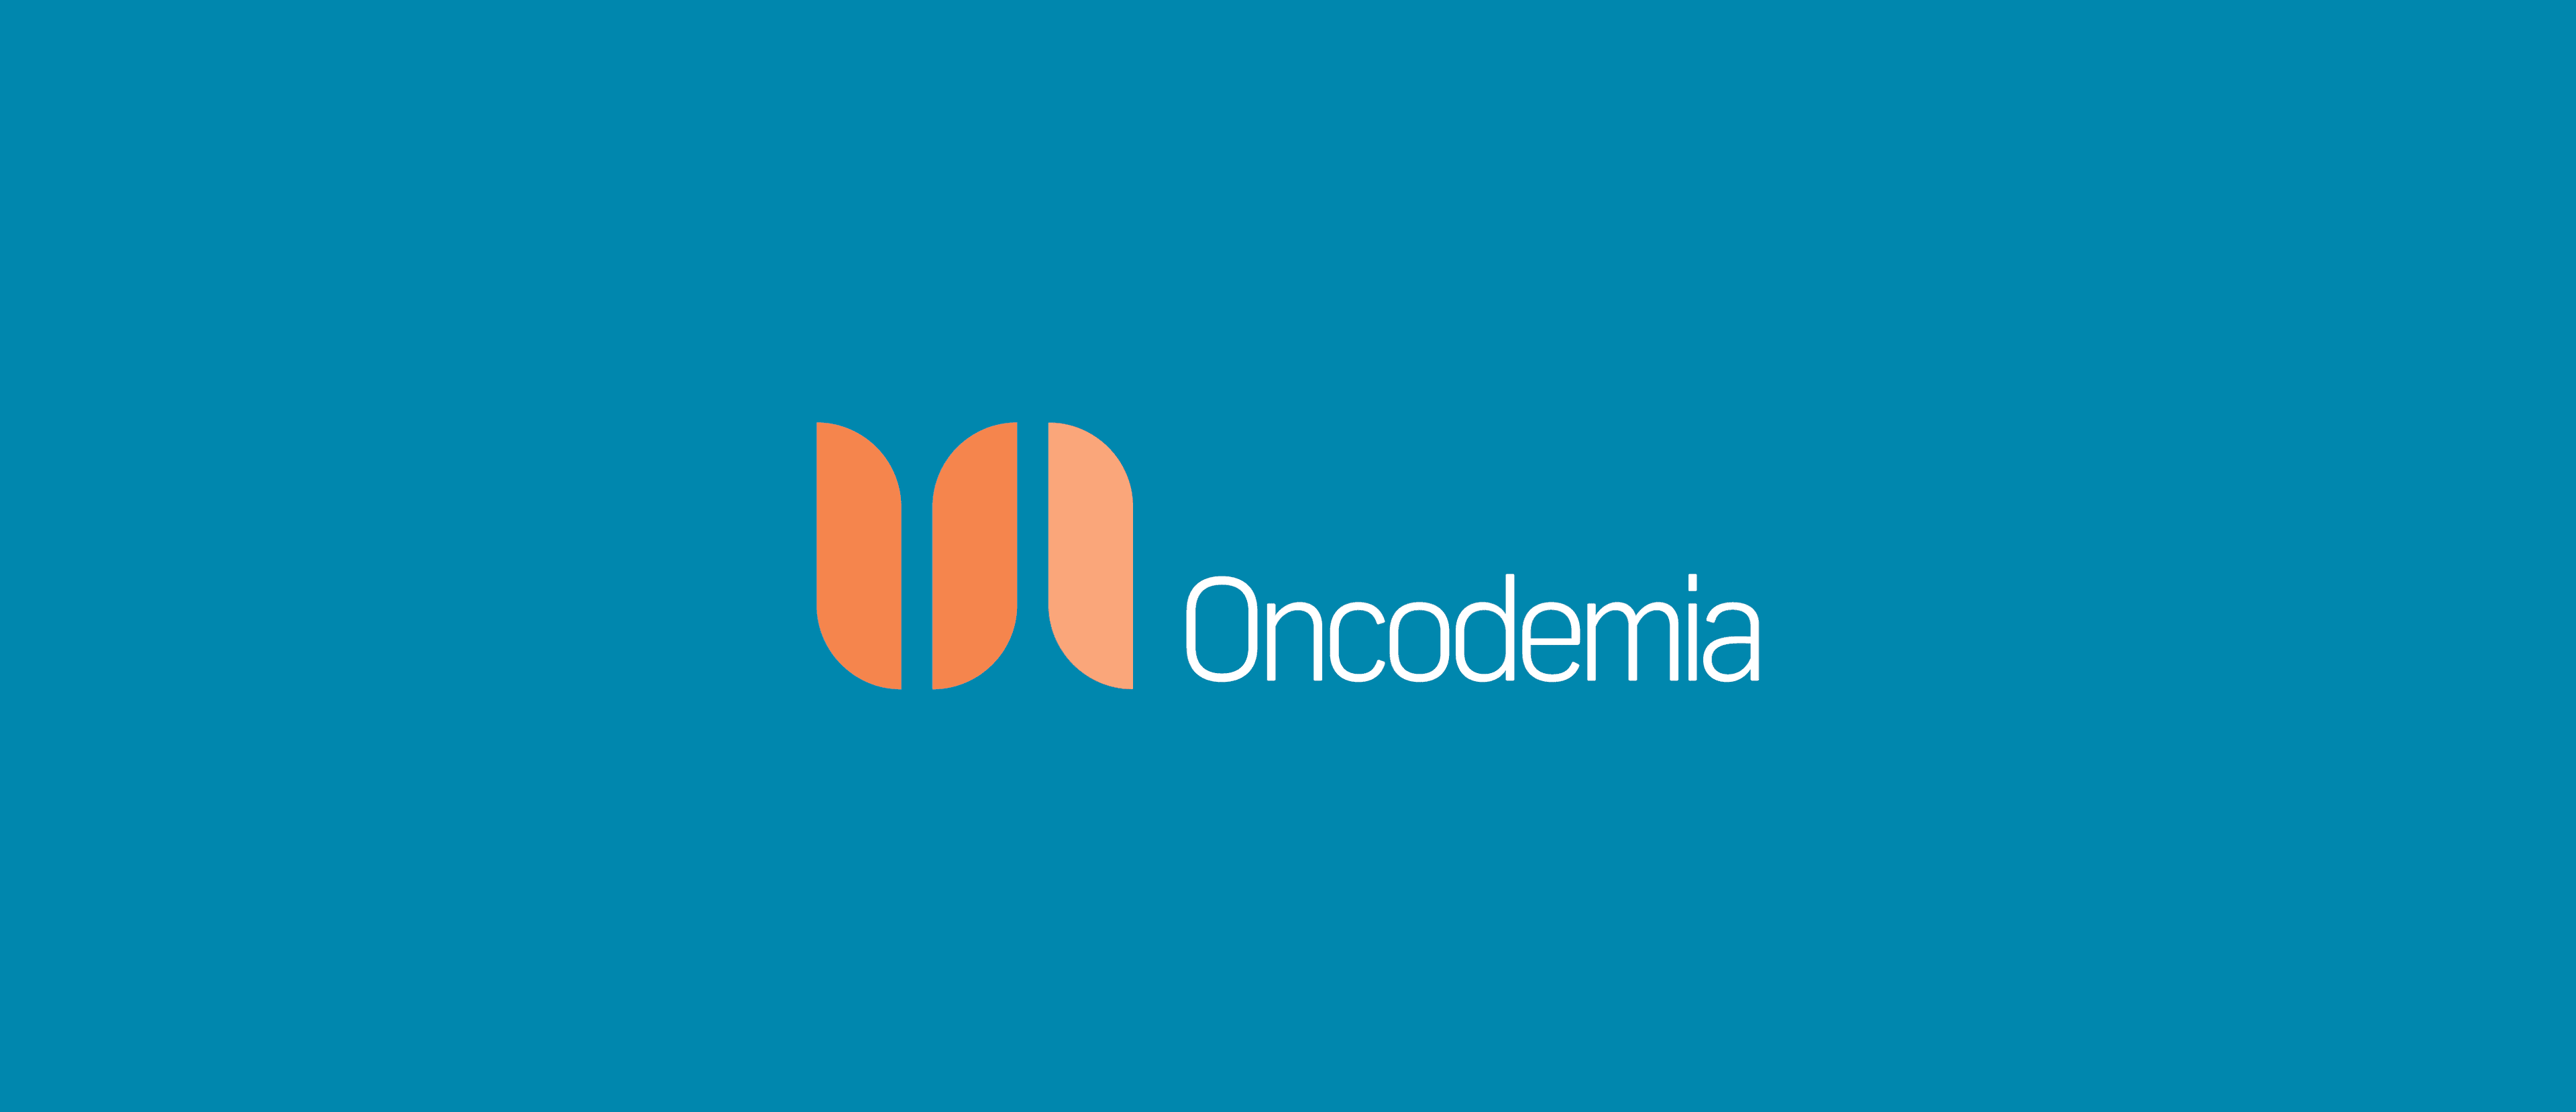 Oncodemia Logo Accord